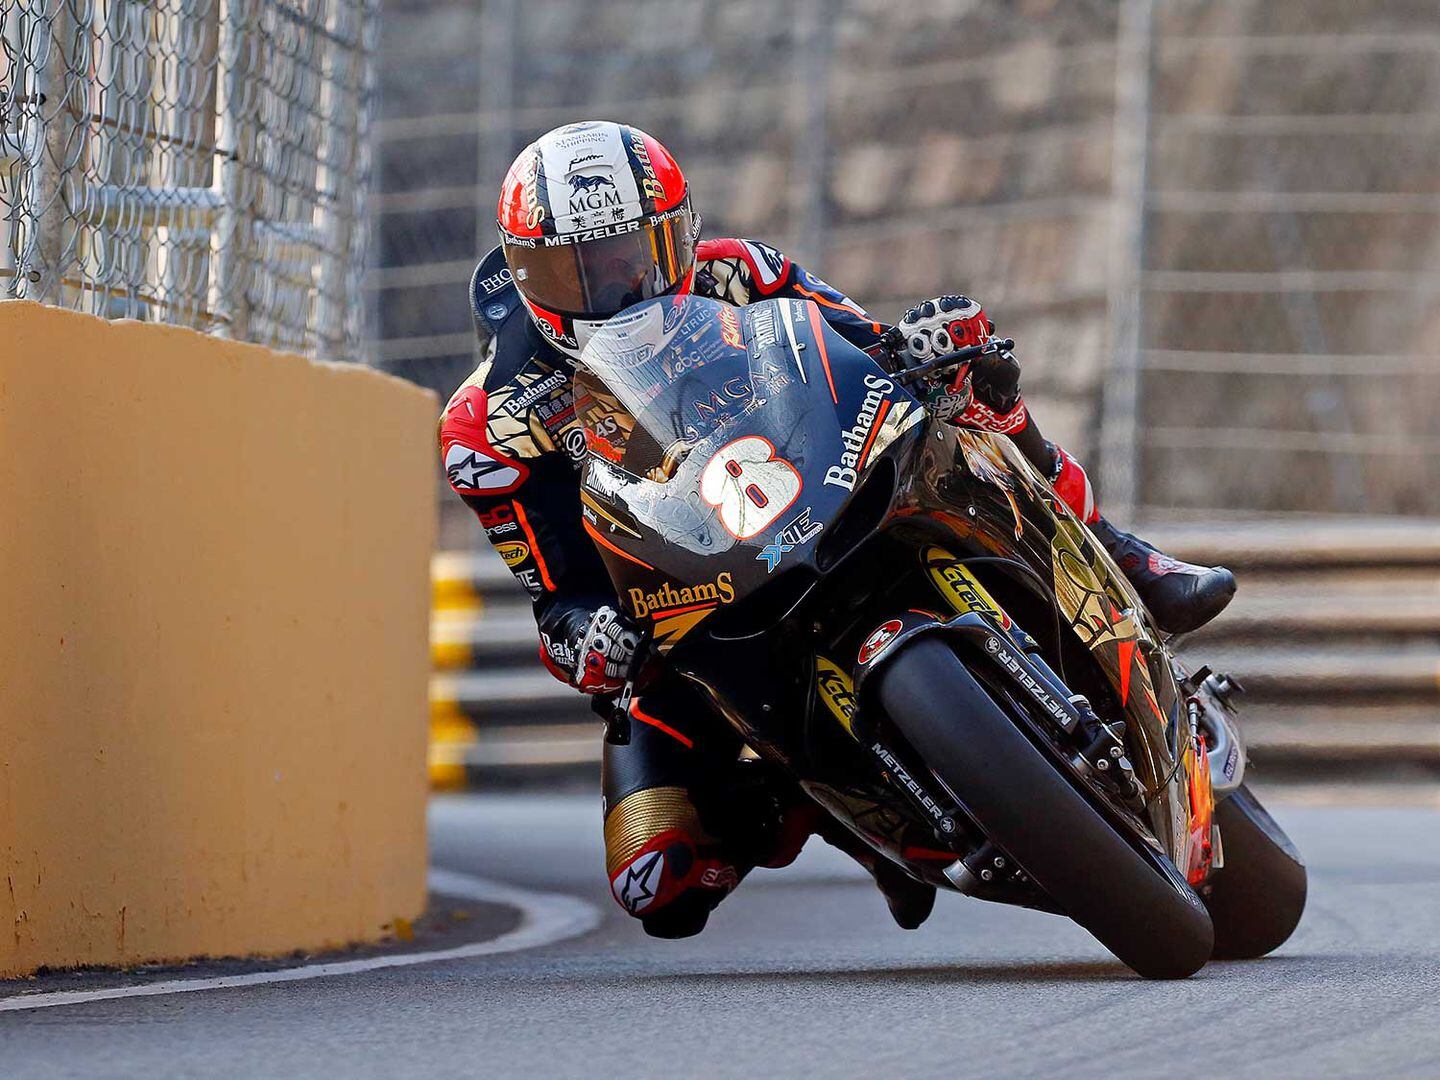 GP de Macau: Corrida de motos adiada para domingo - MotoSport